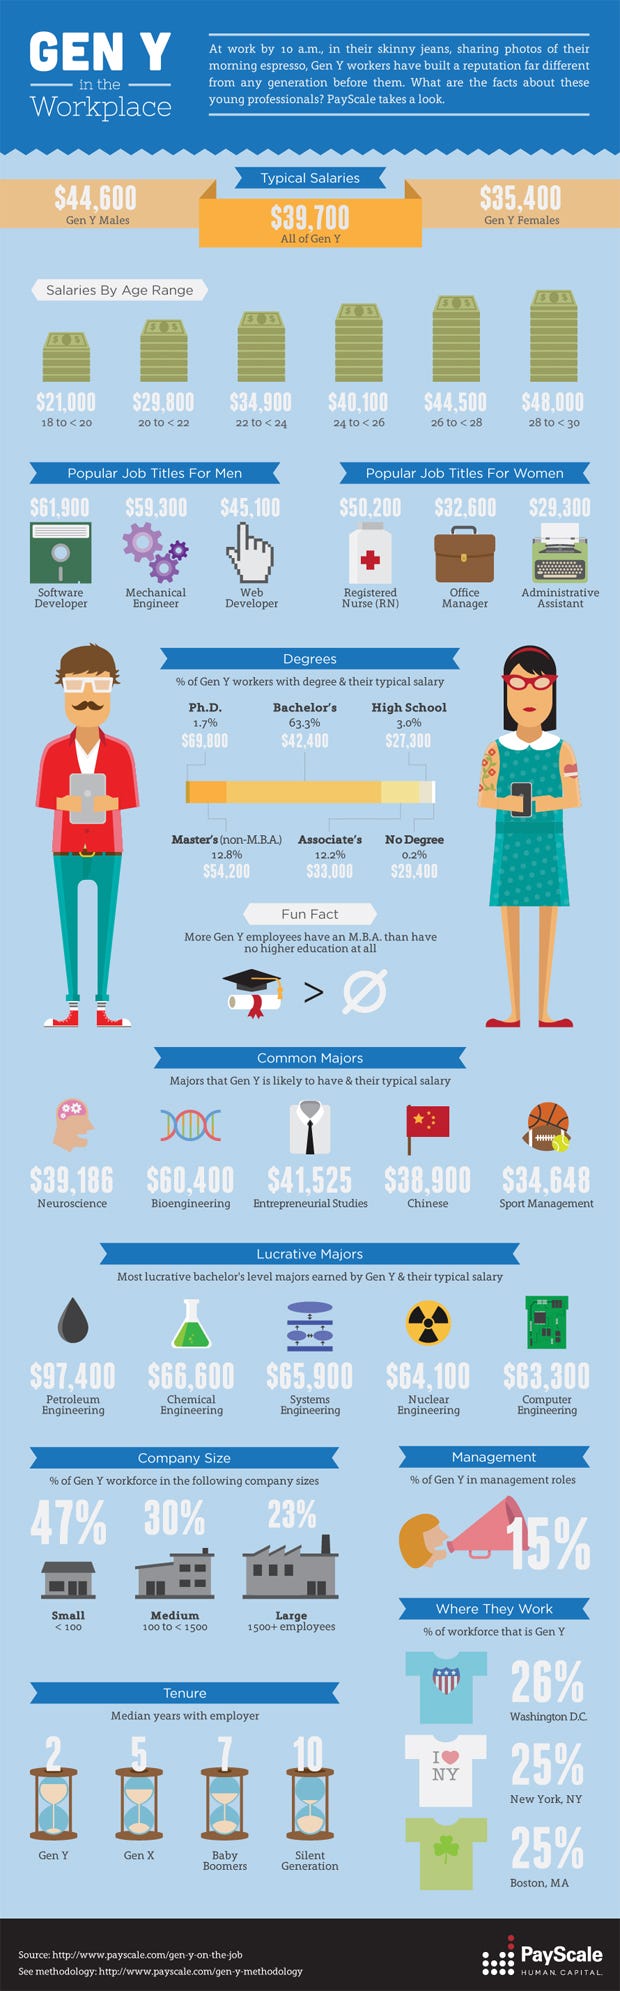 gen y infographic job prospects